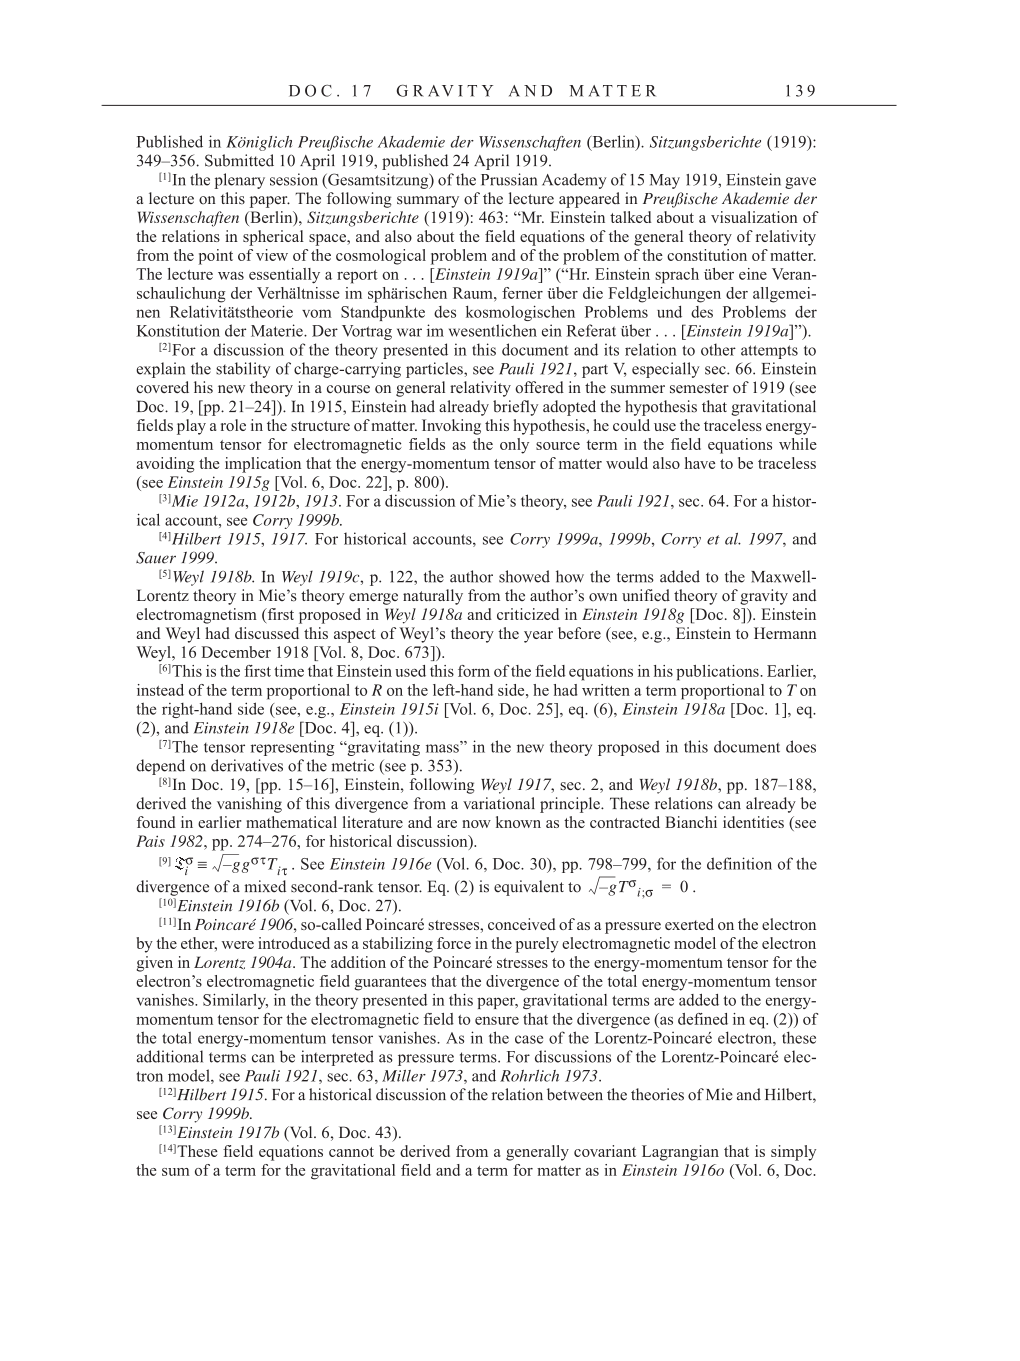 Volume 7: The Berlin Years: Writings, 1918-1921 page 139